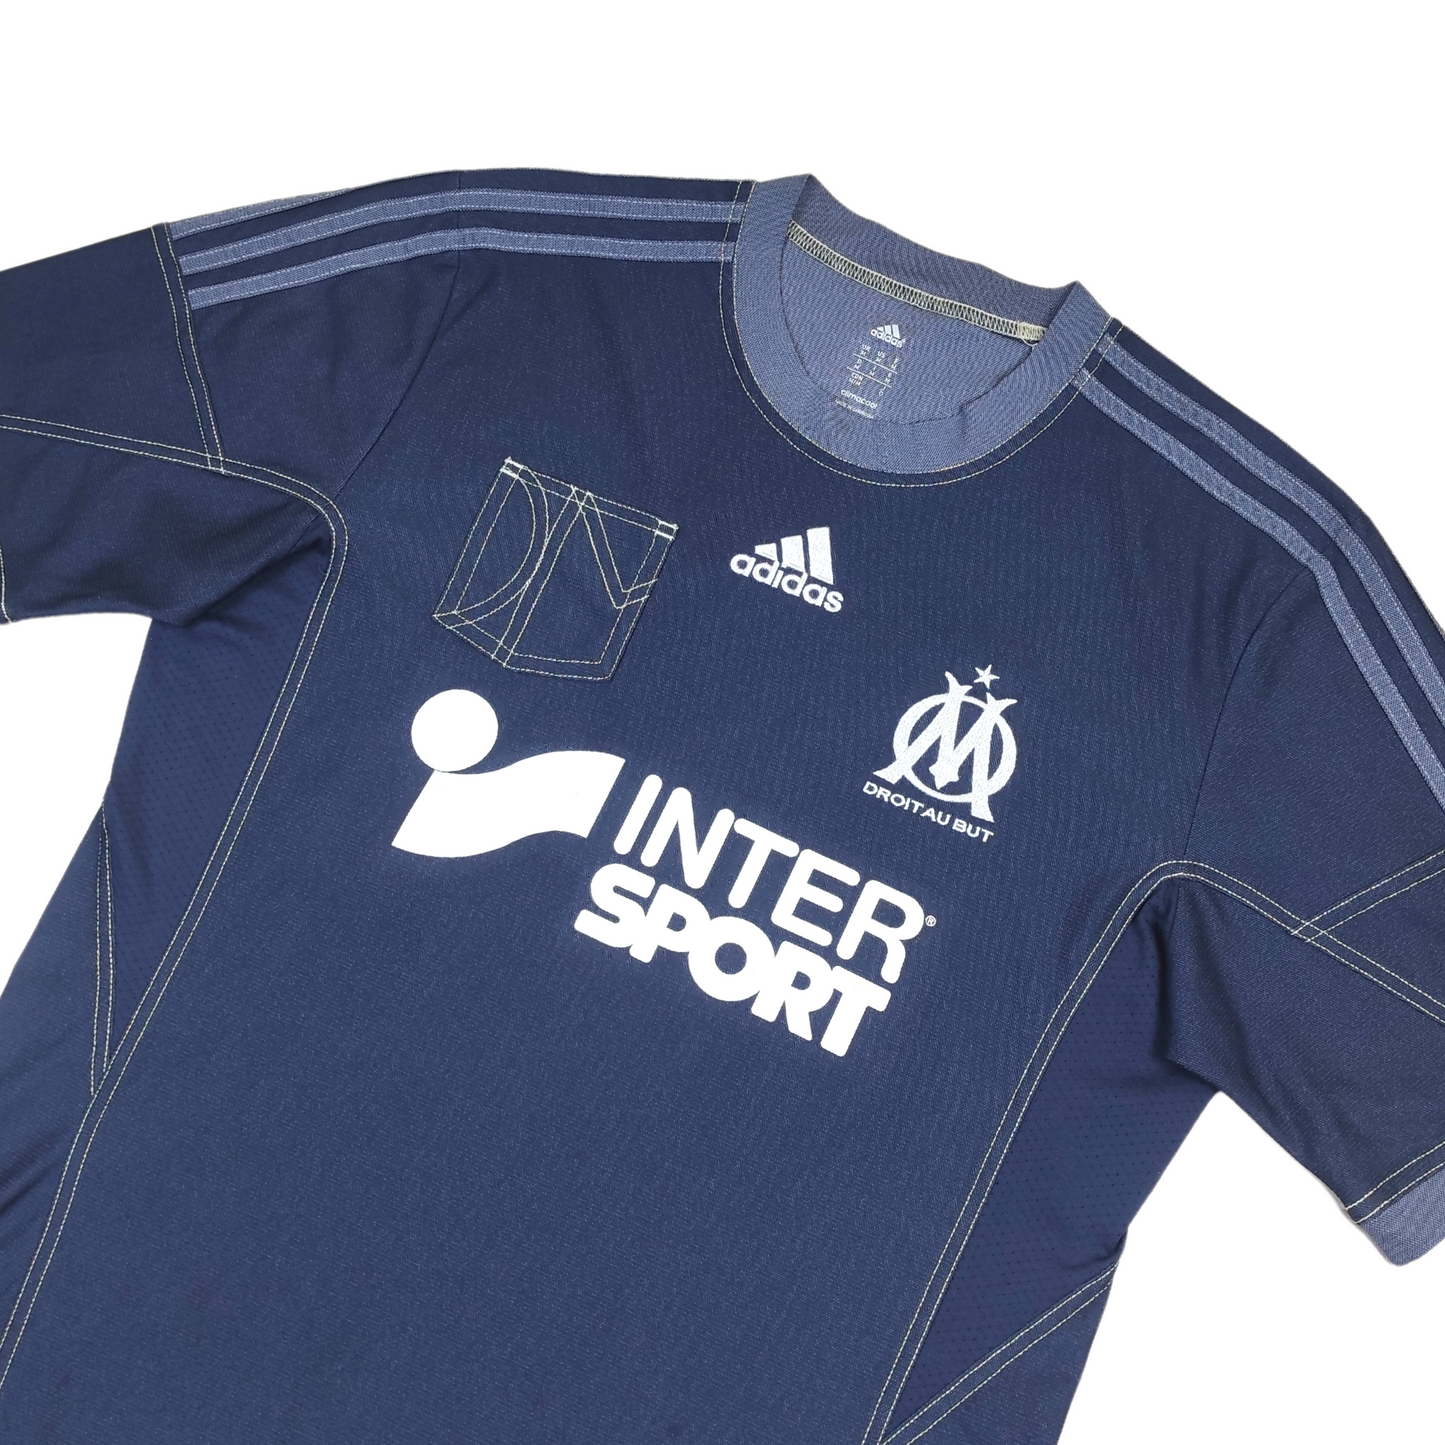 Marseille Away Shirt 2013-2014 Payet (M)